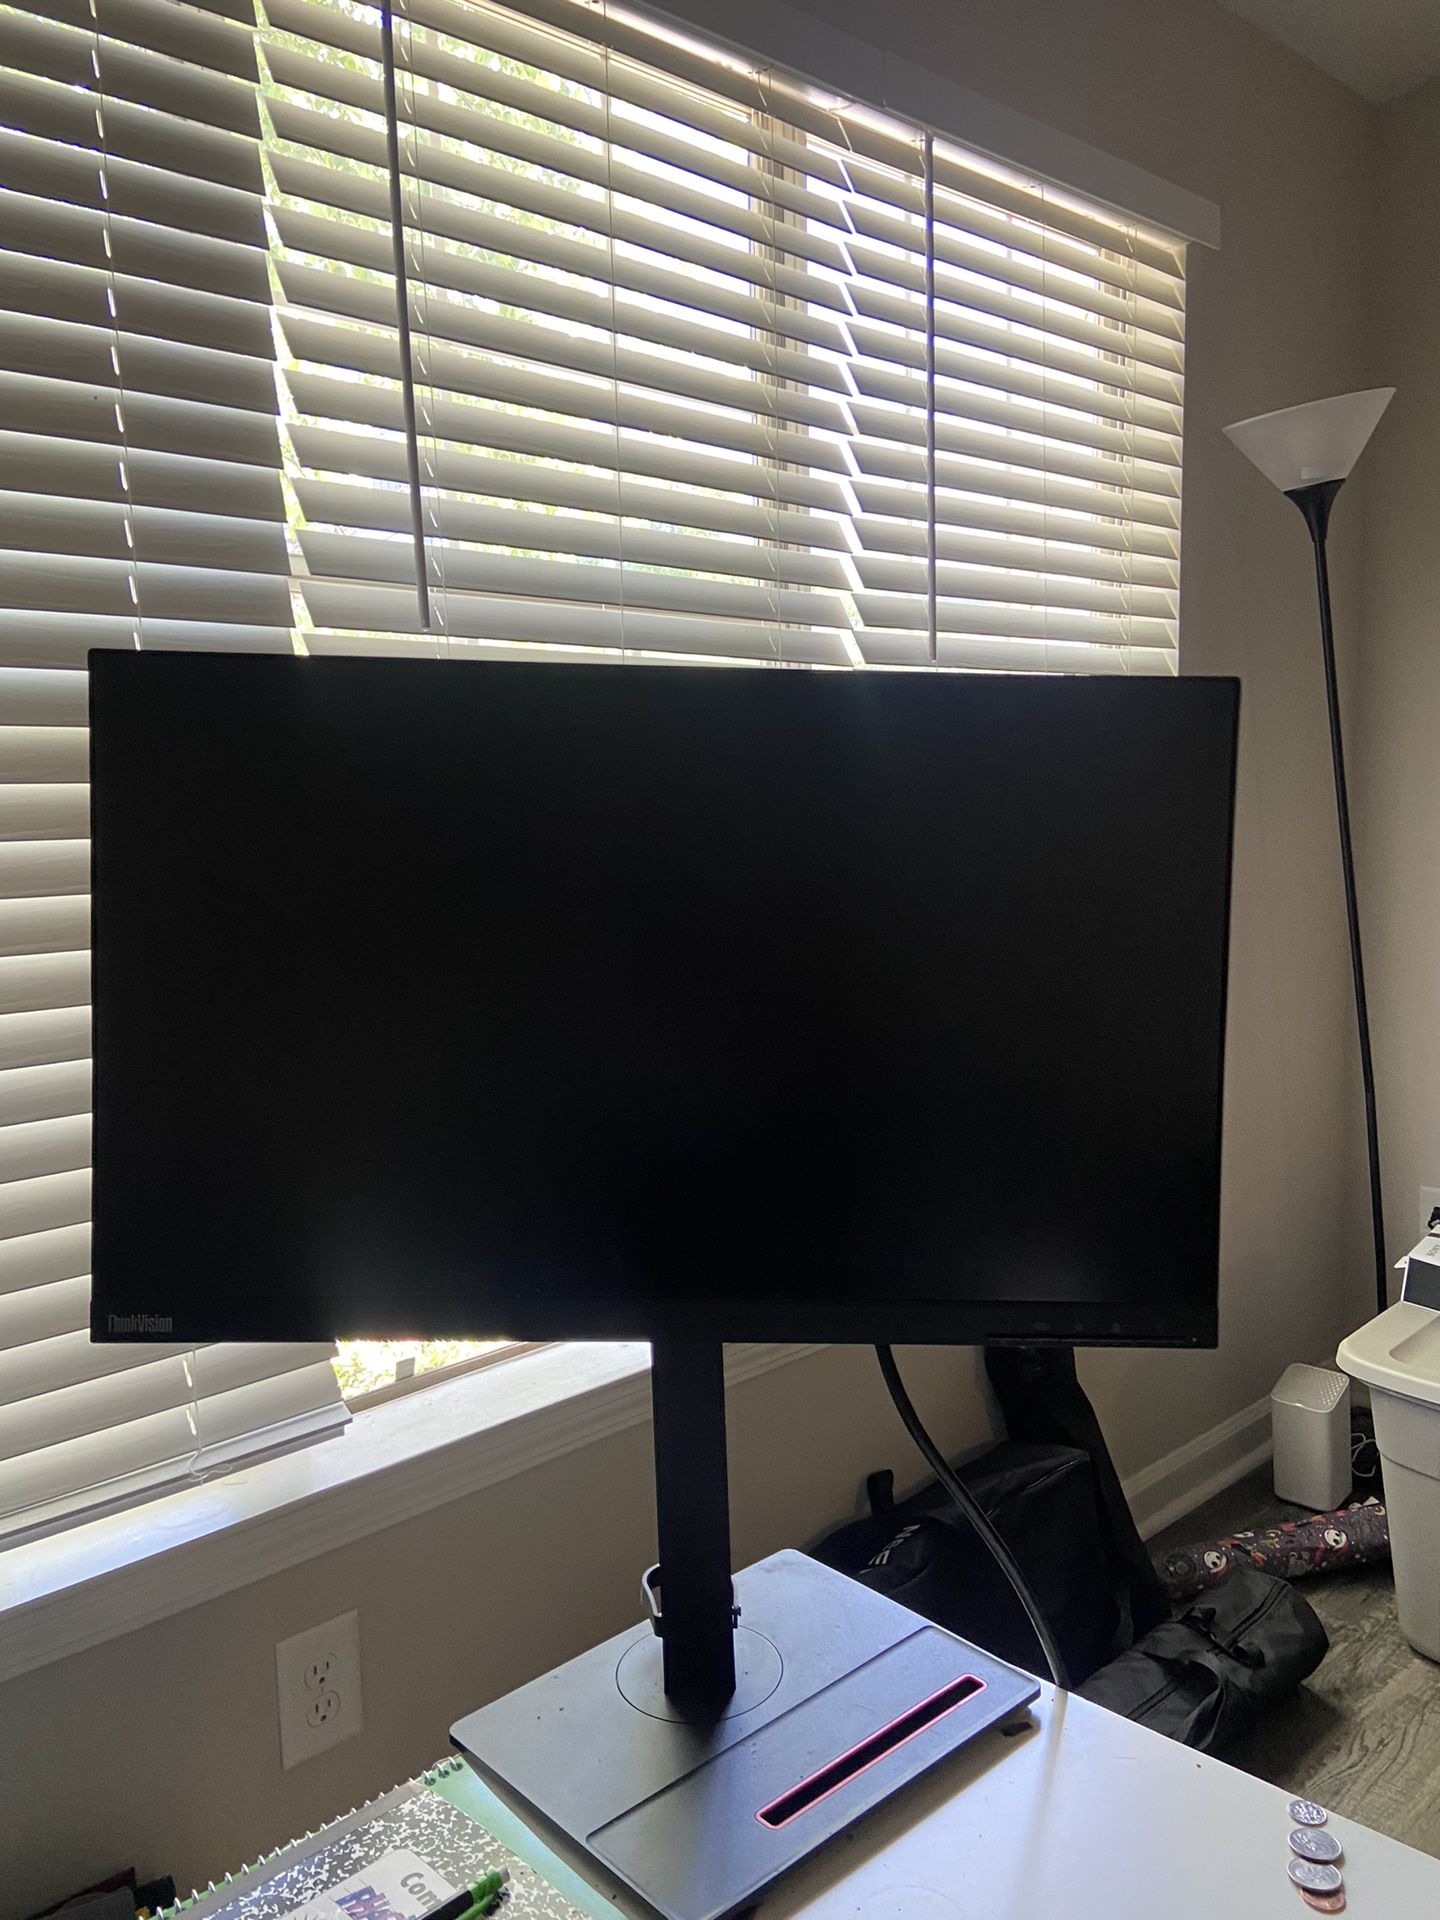 ThinkVision 21.5 inch Monitor - S22e-20